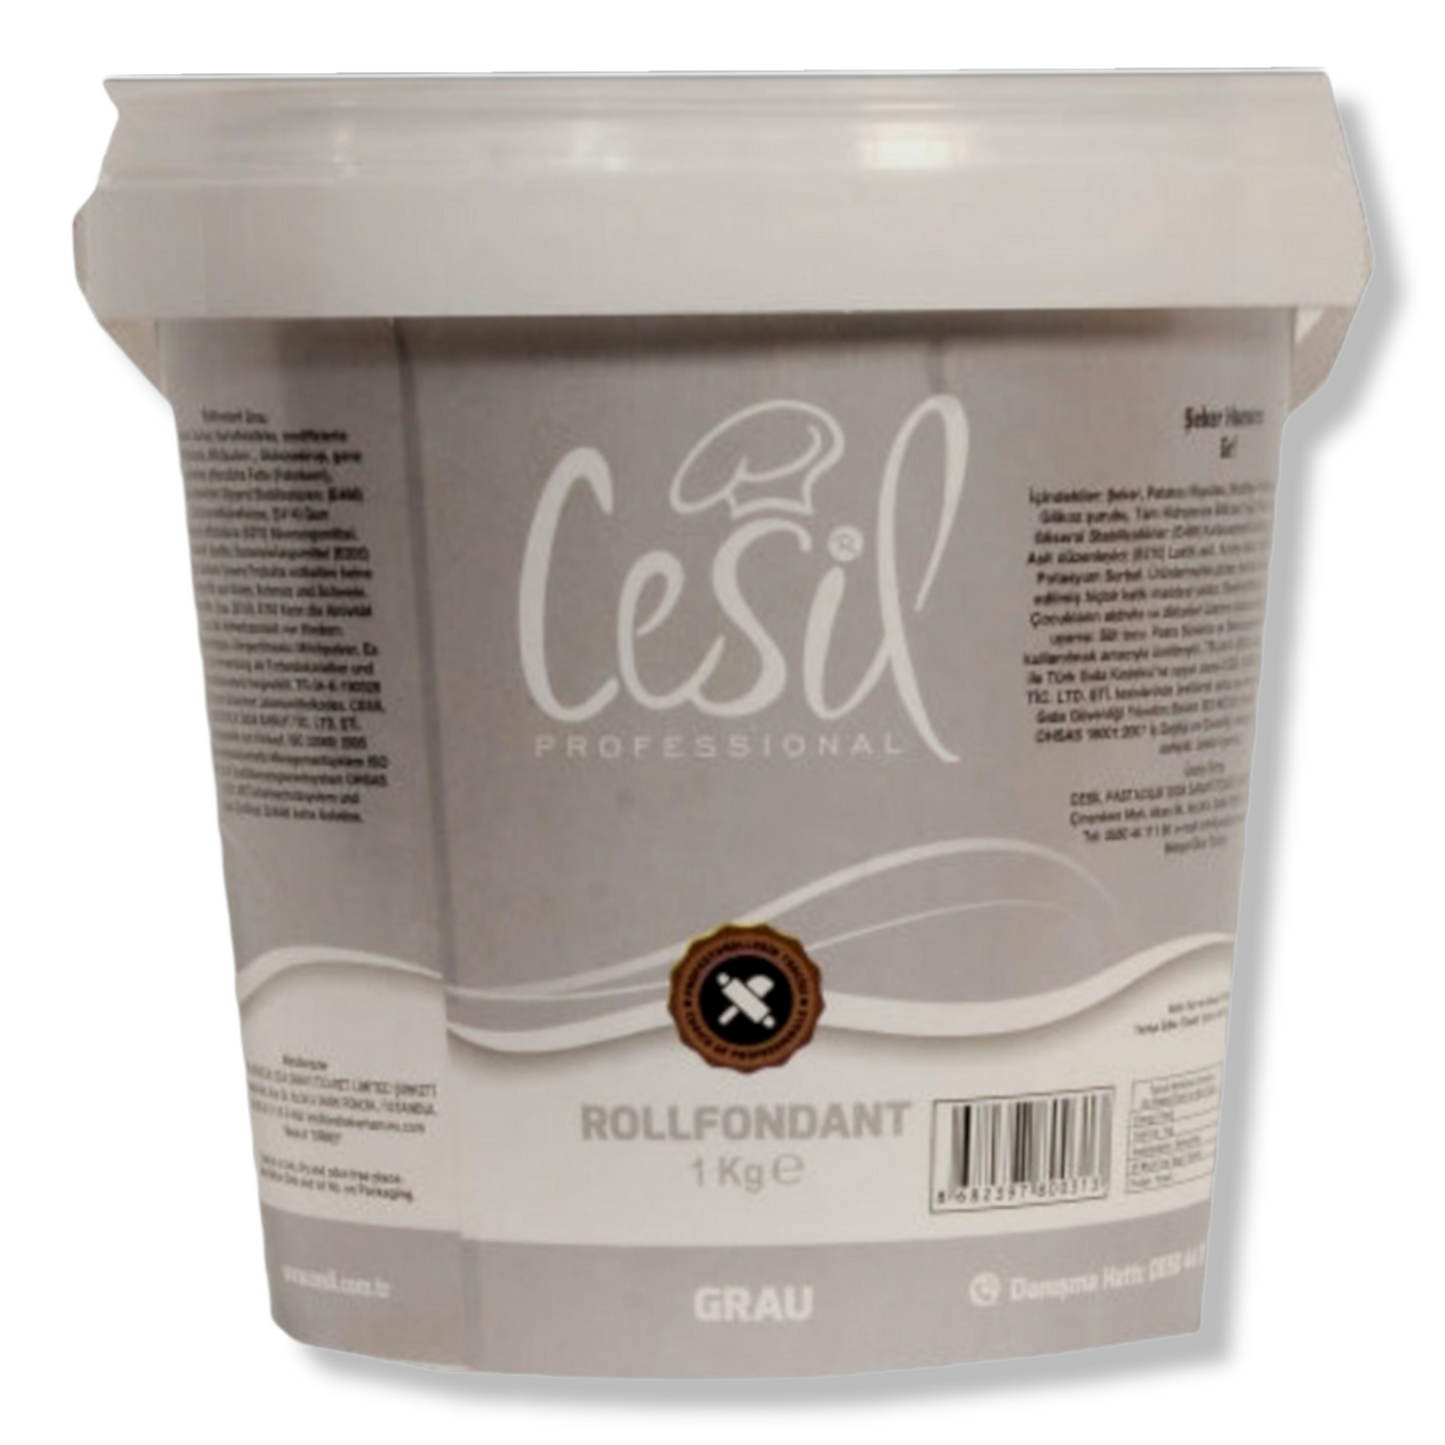 Cesil Rollfondant - Grau 1kg